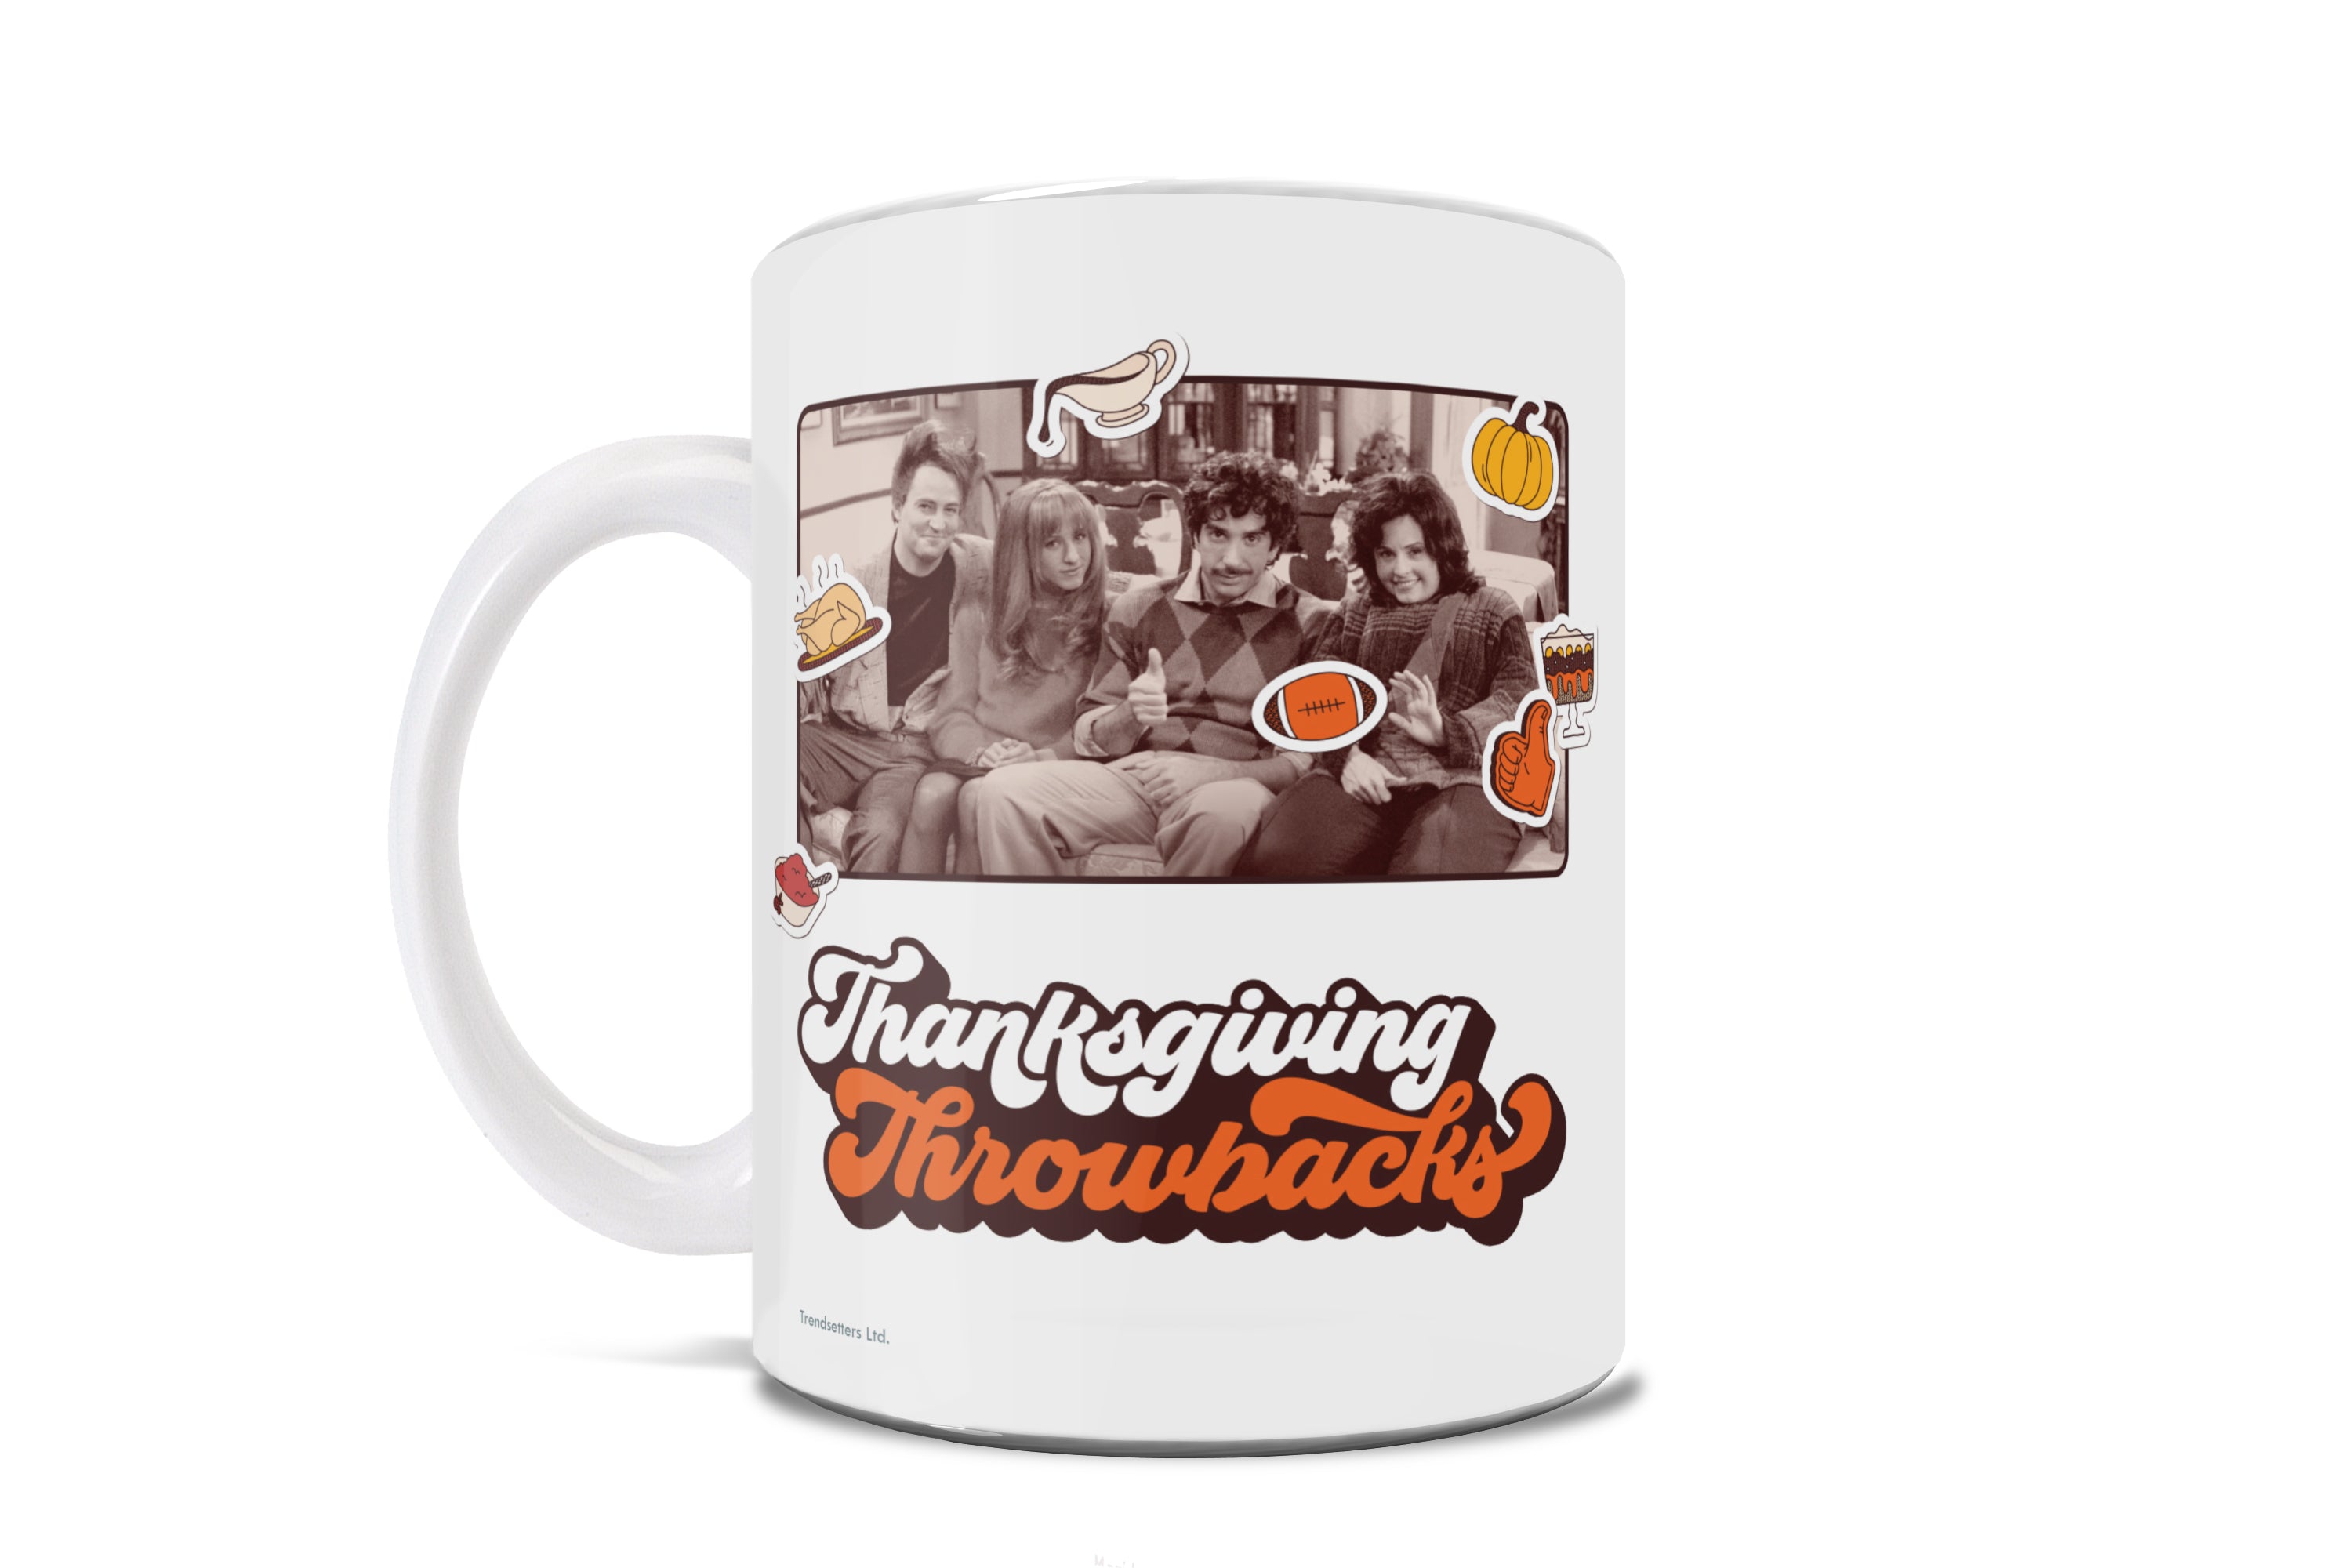 Friends: The Television Show (Thanksgiving Throwbacks) 11 oz Ceramic Mug WMUG1192